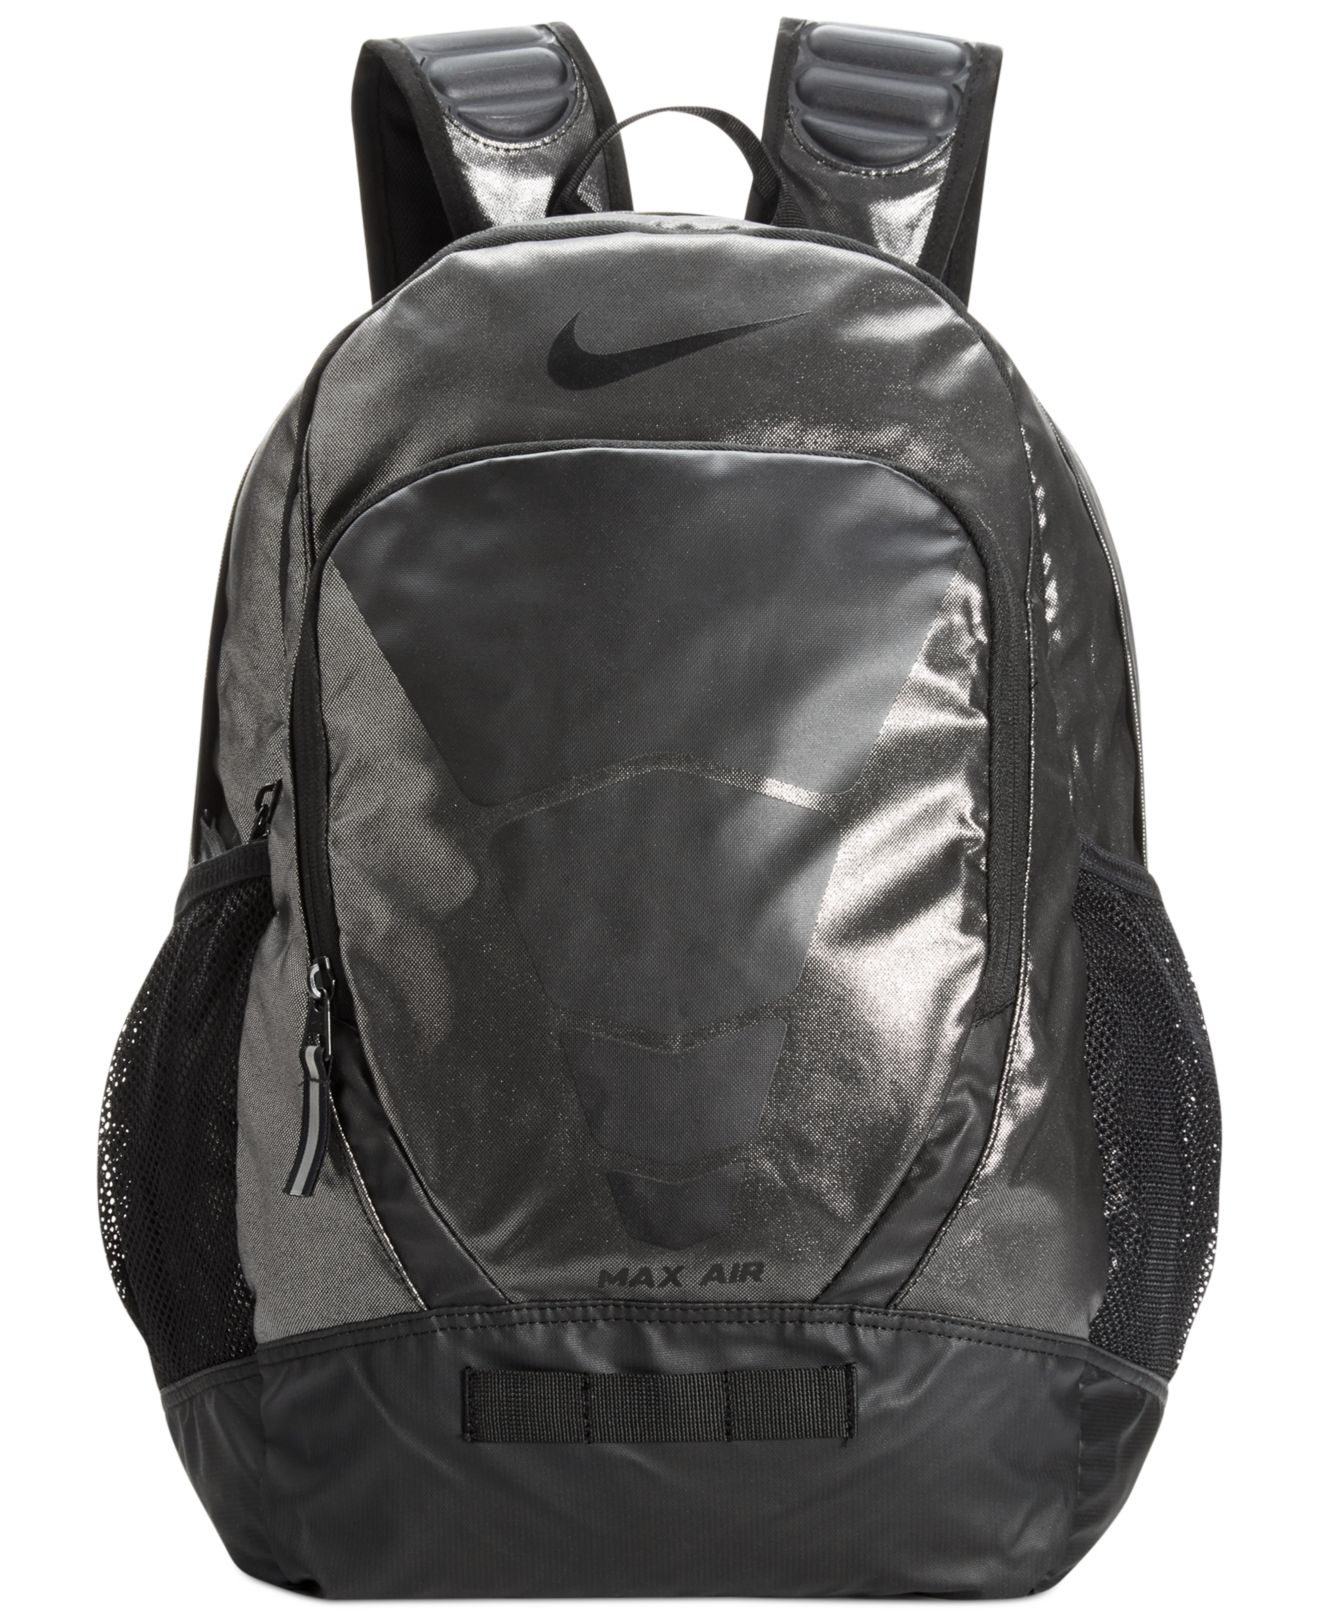 Nike Max Air Vapor Metallic Backpack in Black for Men - Lyst